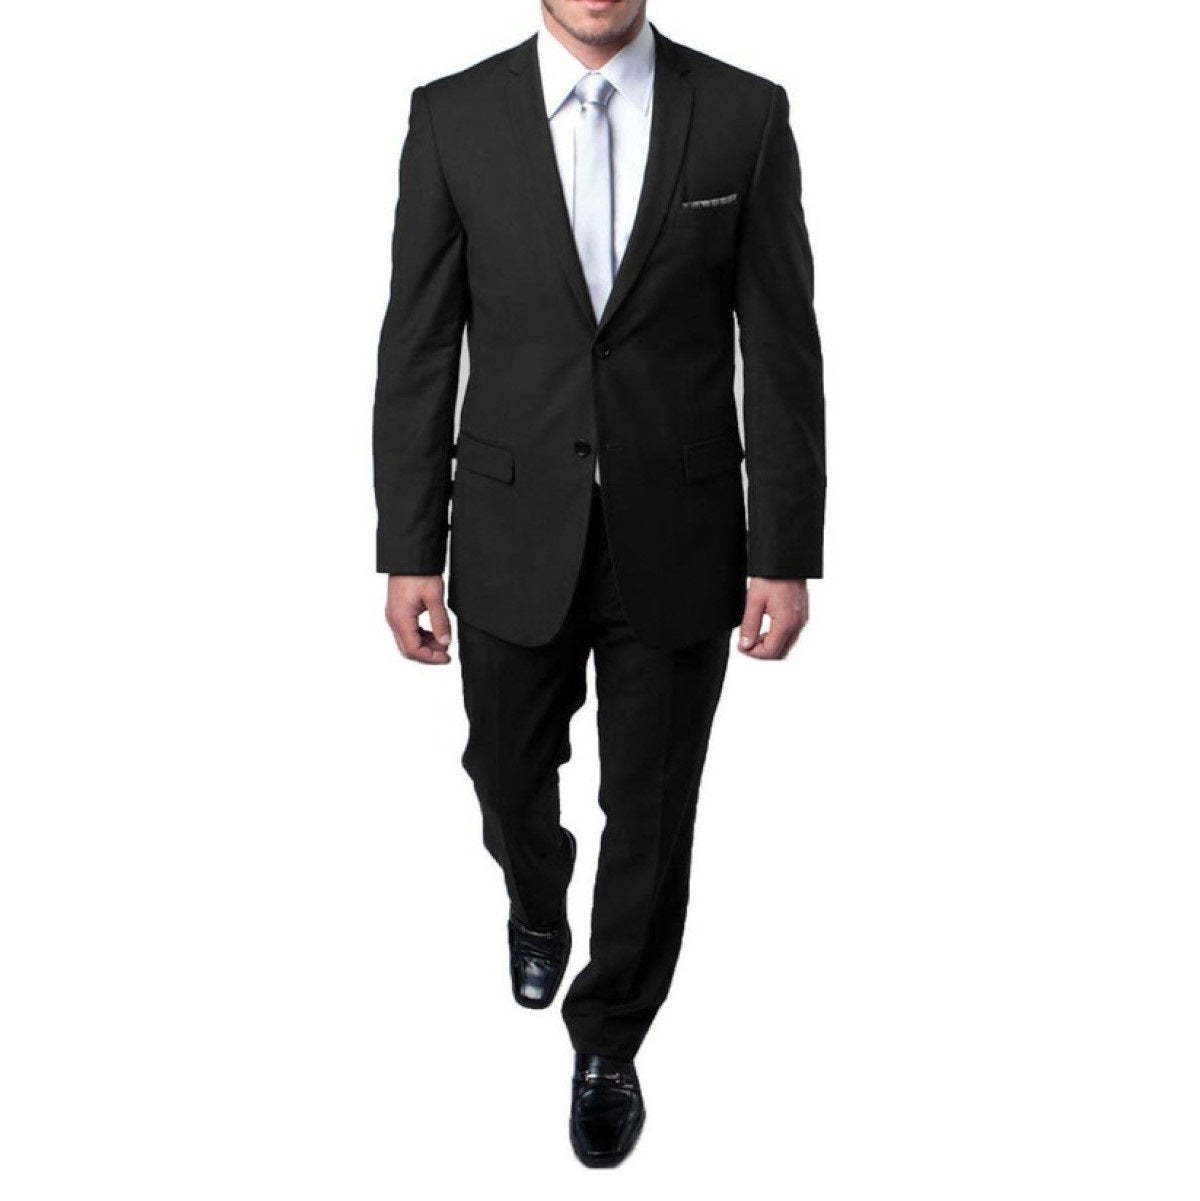 Traje Formal para Hombre TA-M085S-01 Black - Formal Suit for Men